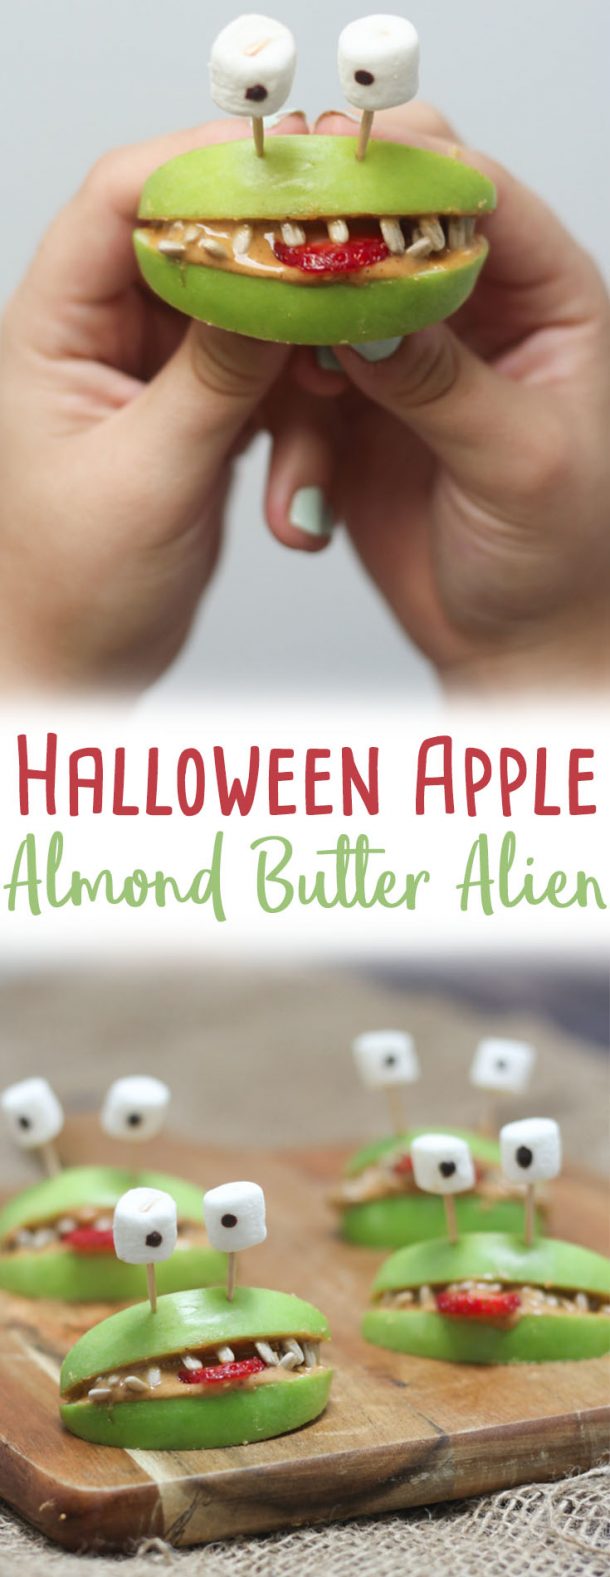 Halloween Apple and Almond Butter Alien Smiles | Gluten Free Healthy ...